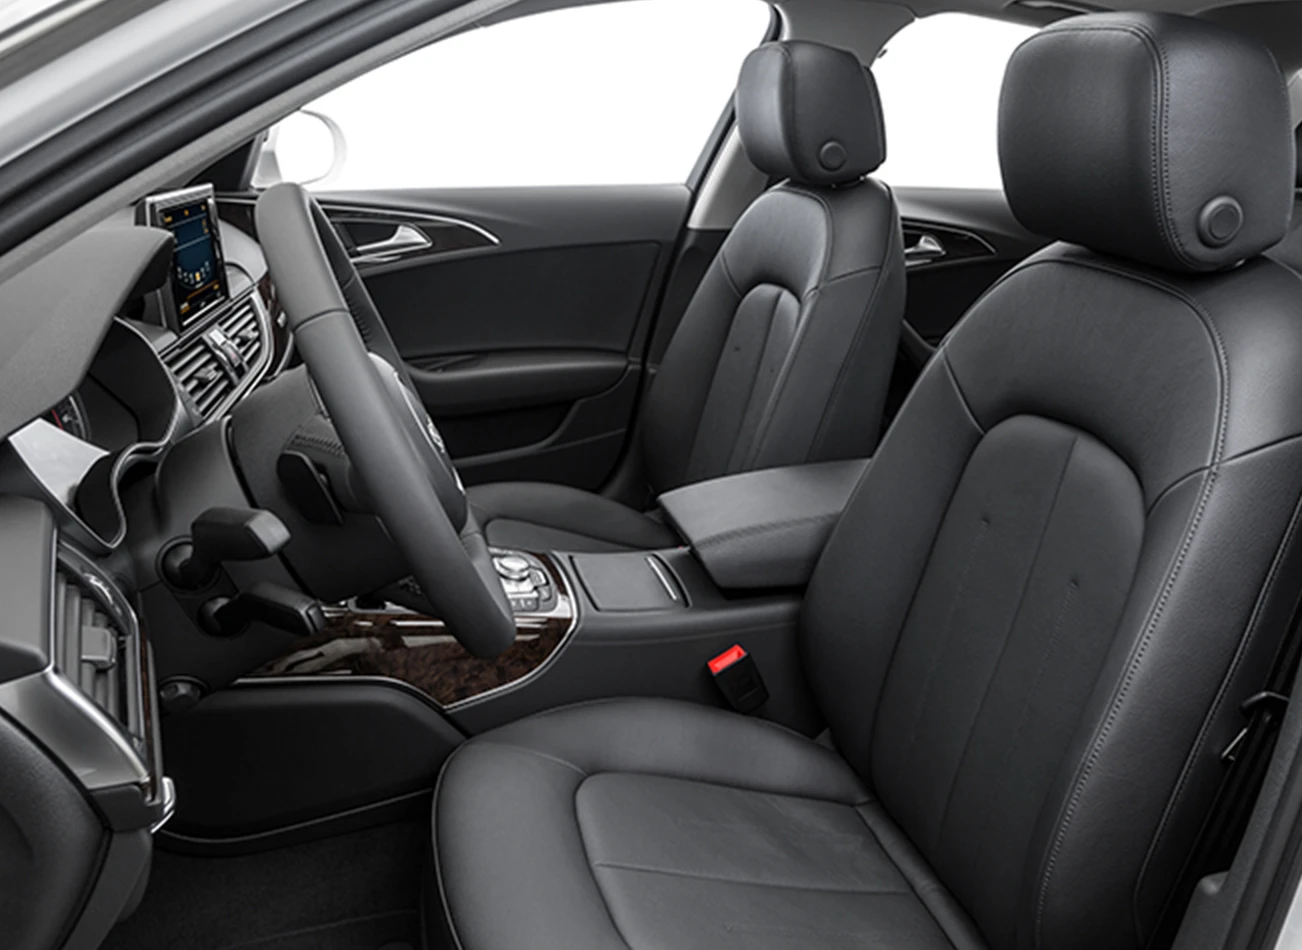 2016 Audi A6 Review: Front Seats | CarMax